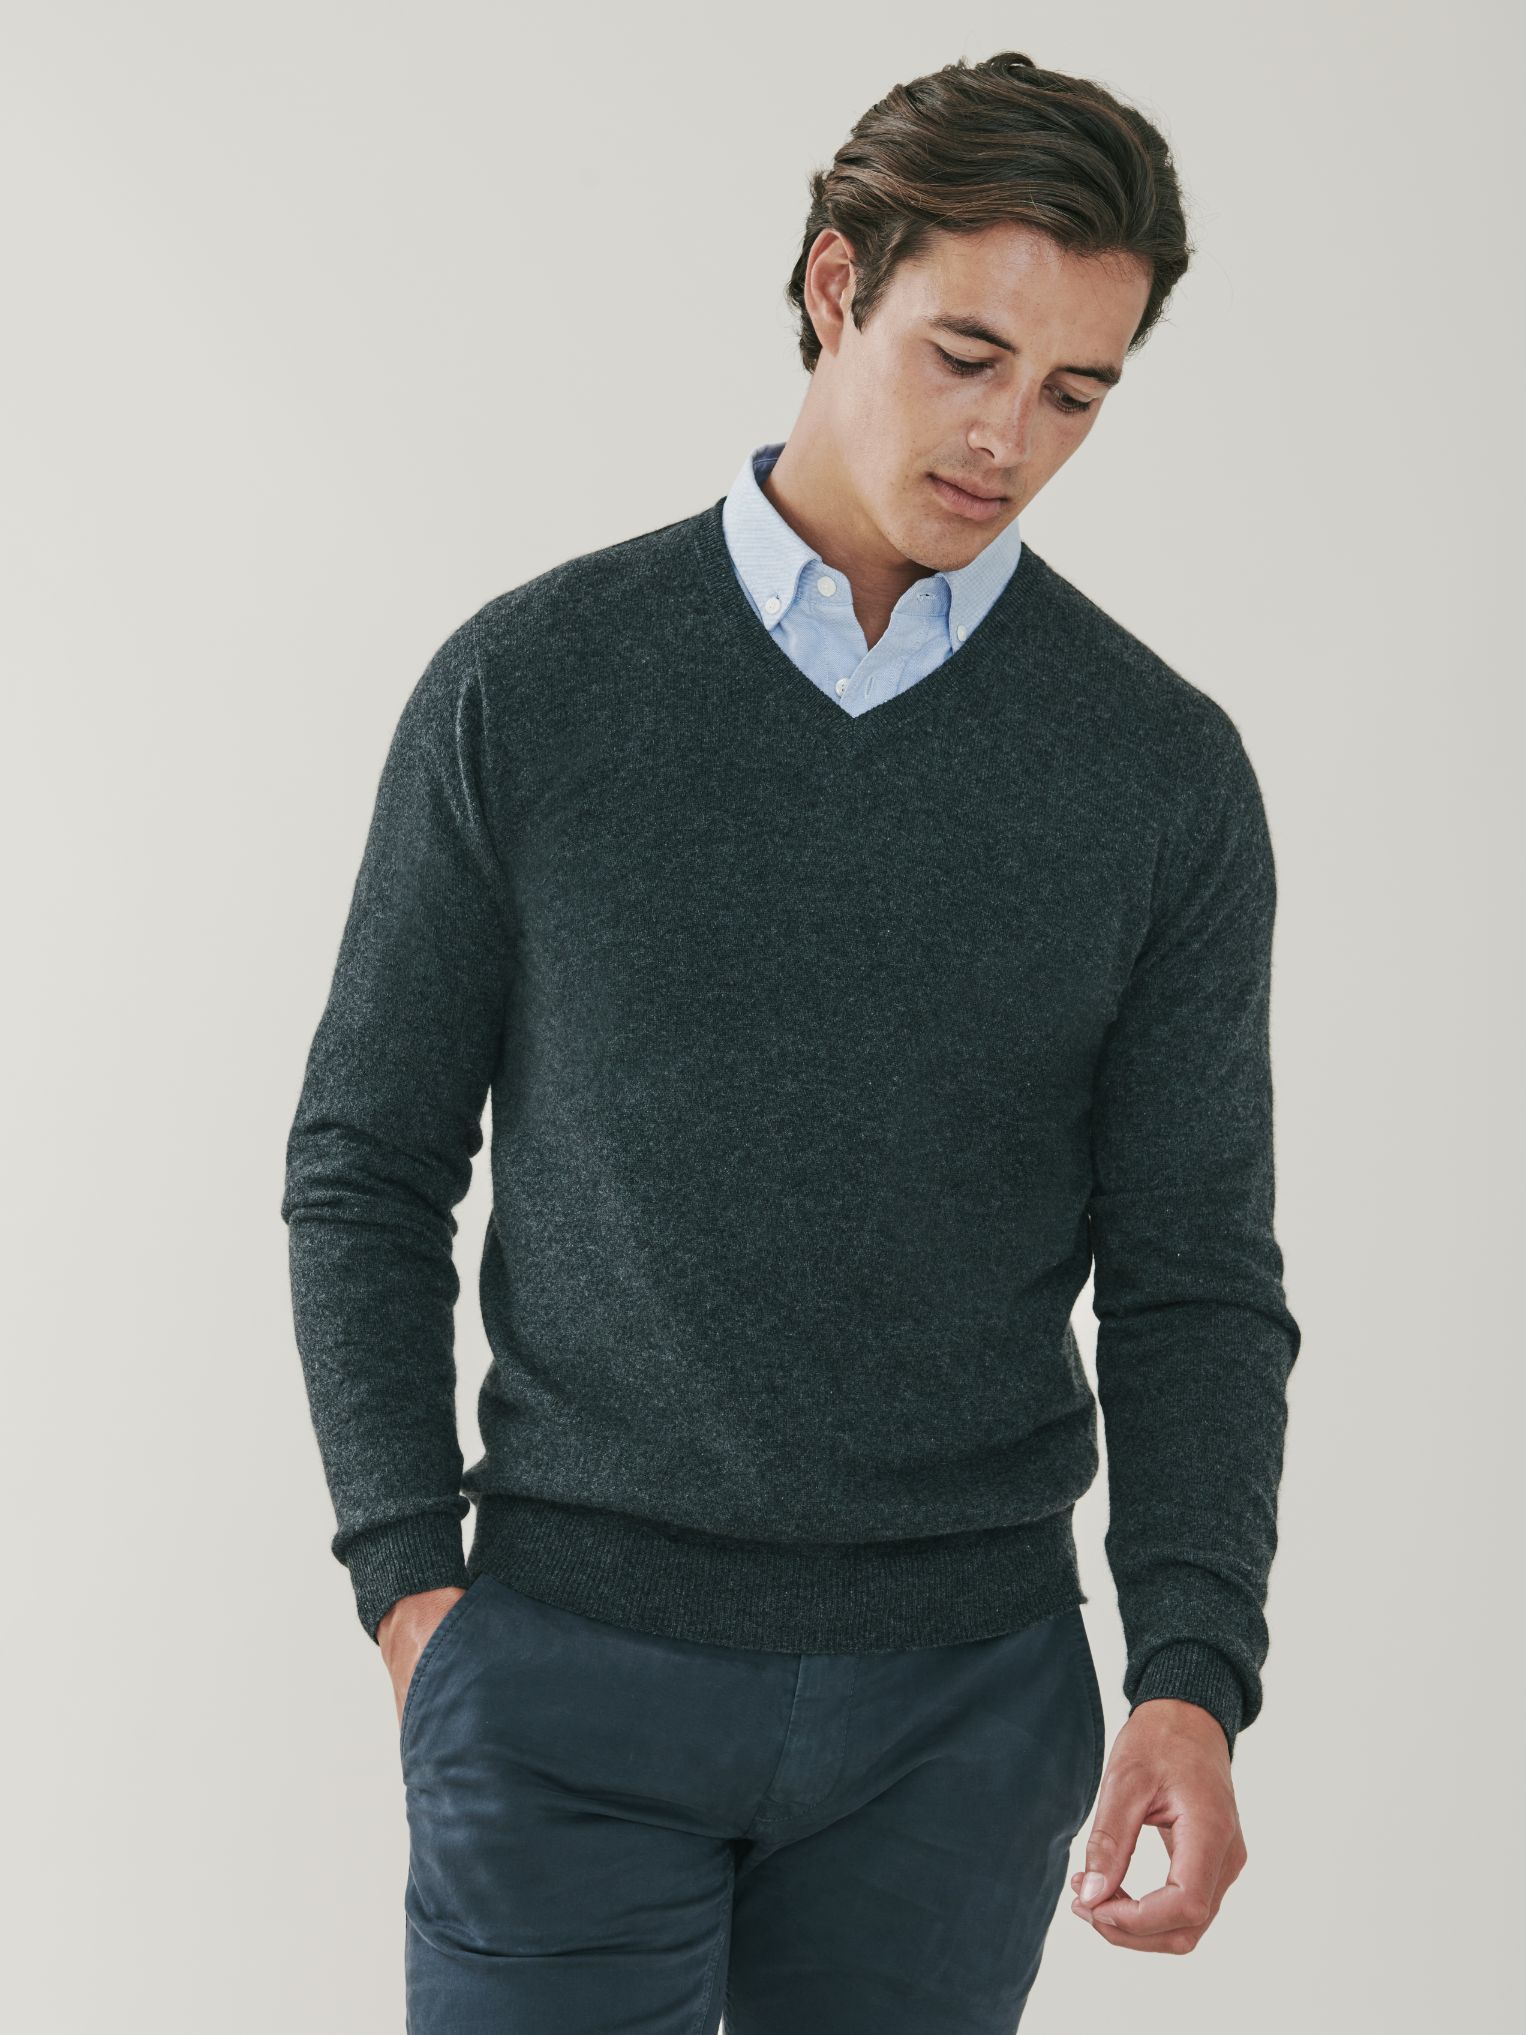 Killington | Men's Cashmere V Neck sweater in Charcoal Grey